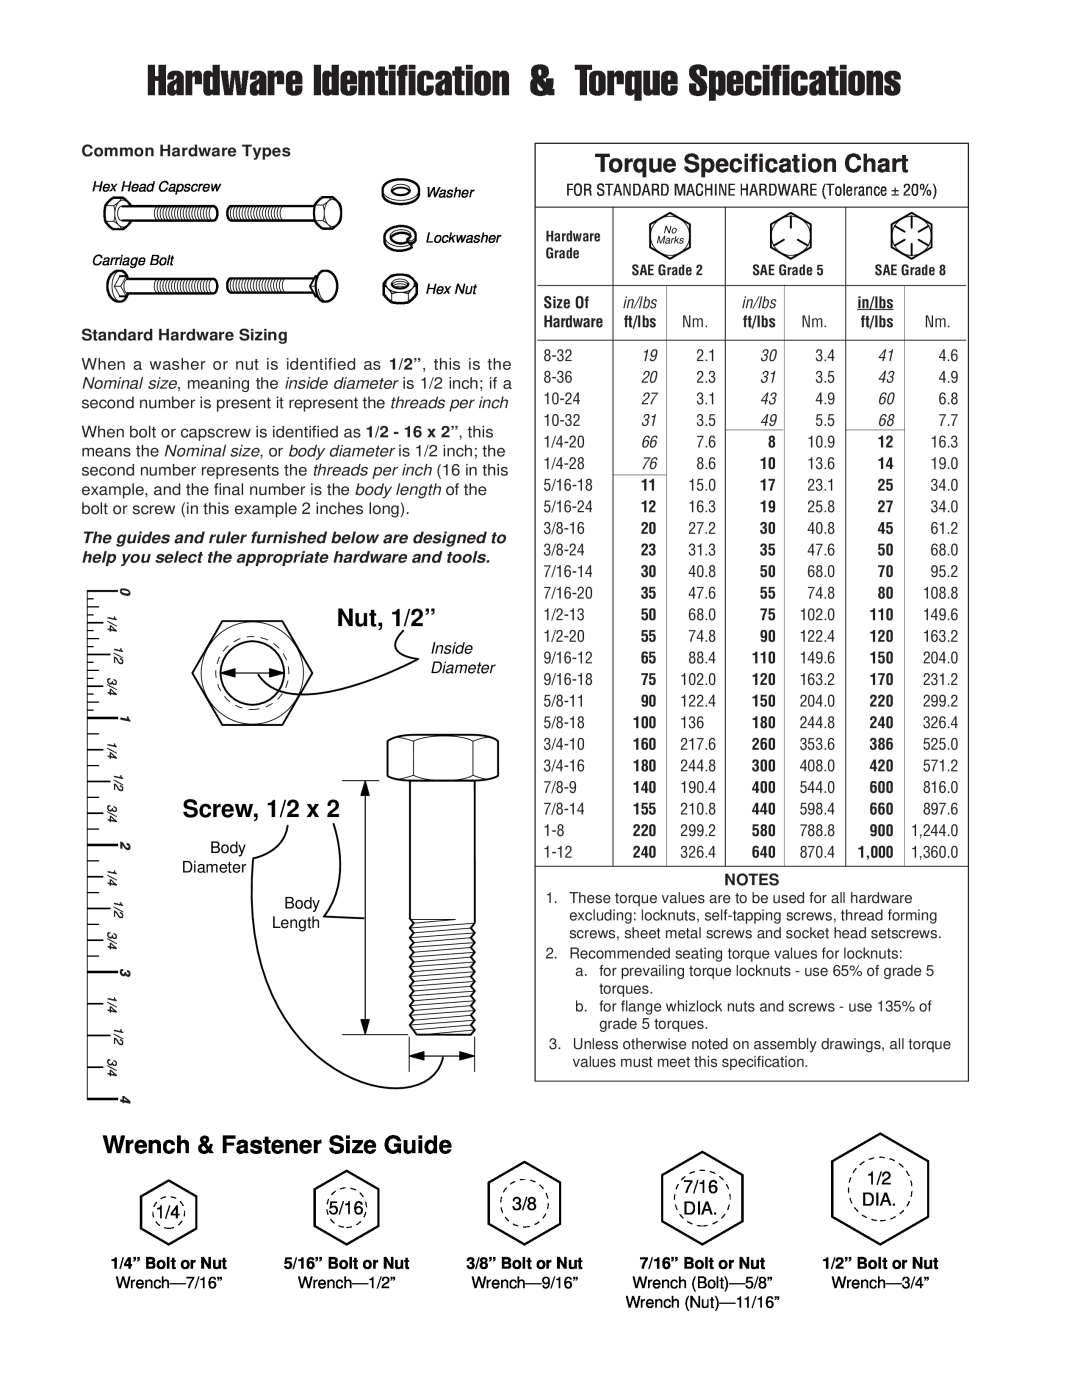 Snapper 2373 manual Hardware Identification & Torque Specifications, Torque Specification Chart, Nut, 1/2”, Screw, 1/2 